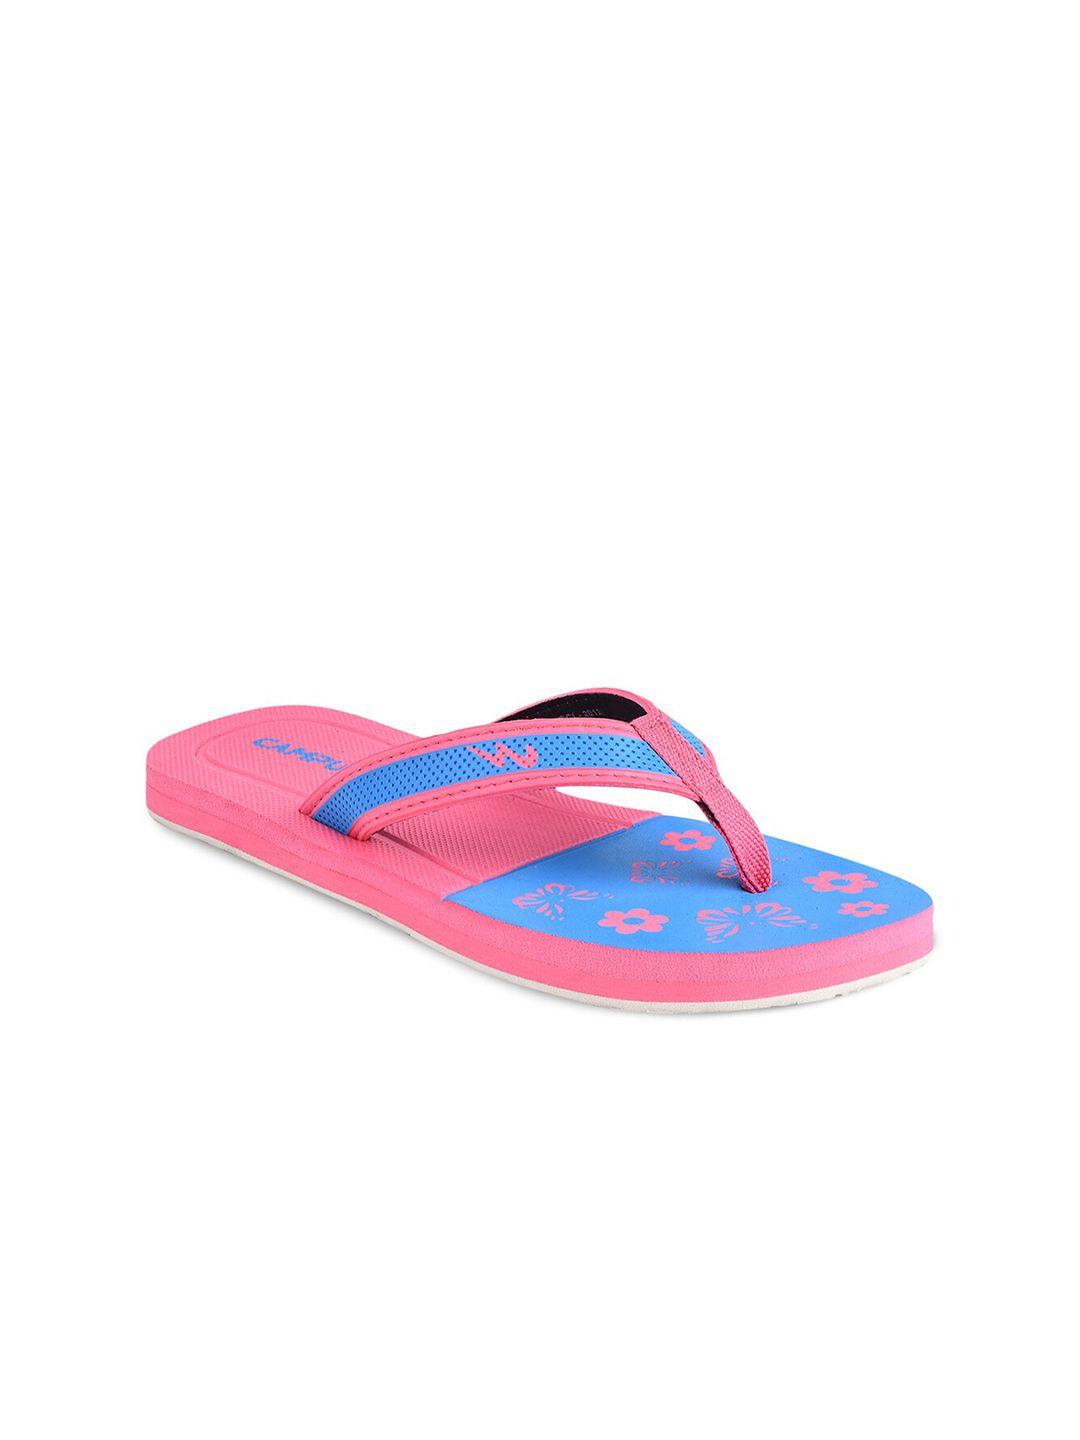 campus-women-pink-&-blue-printed-slip-on-flip-flops